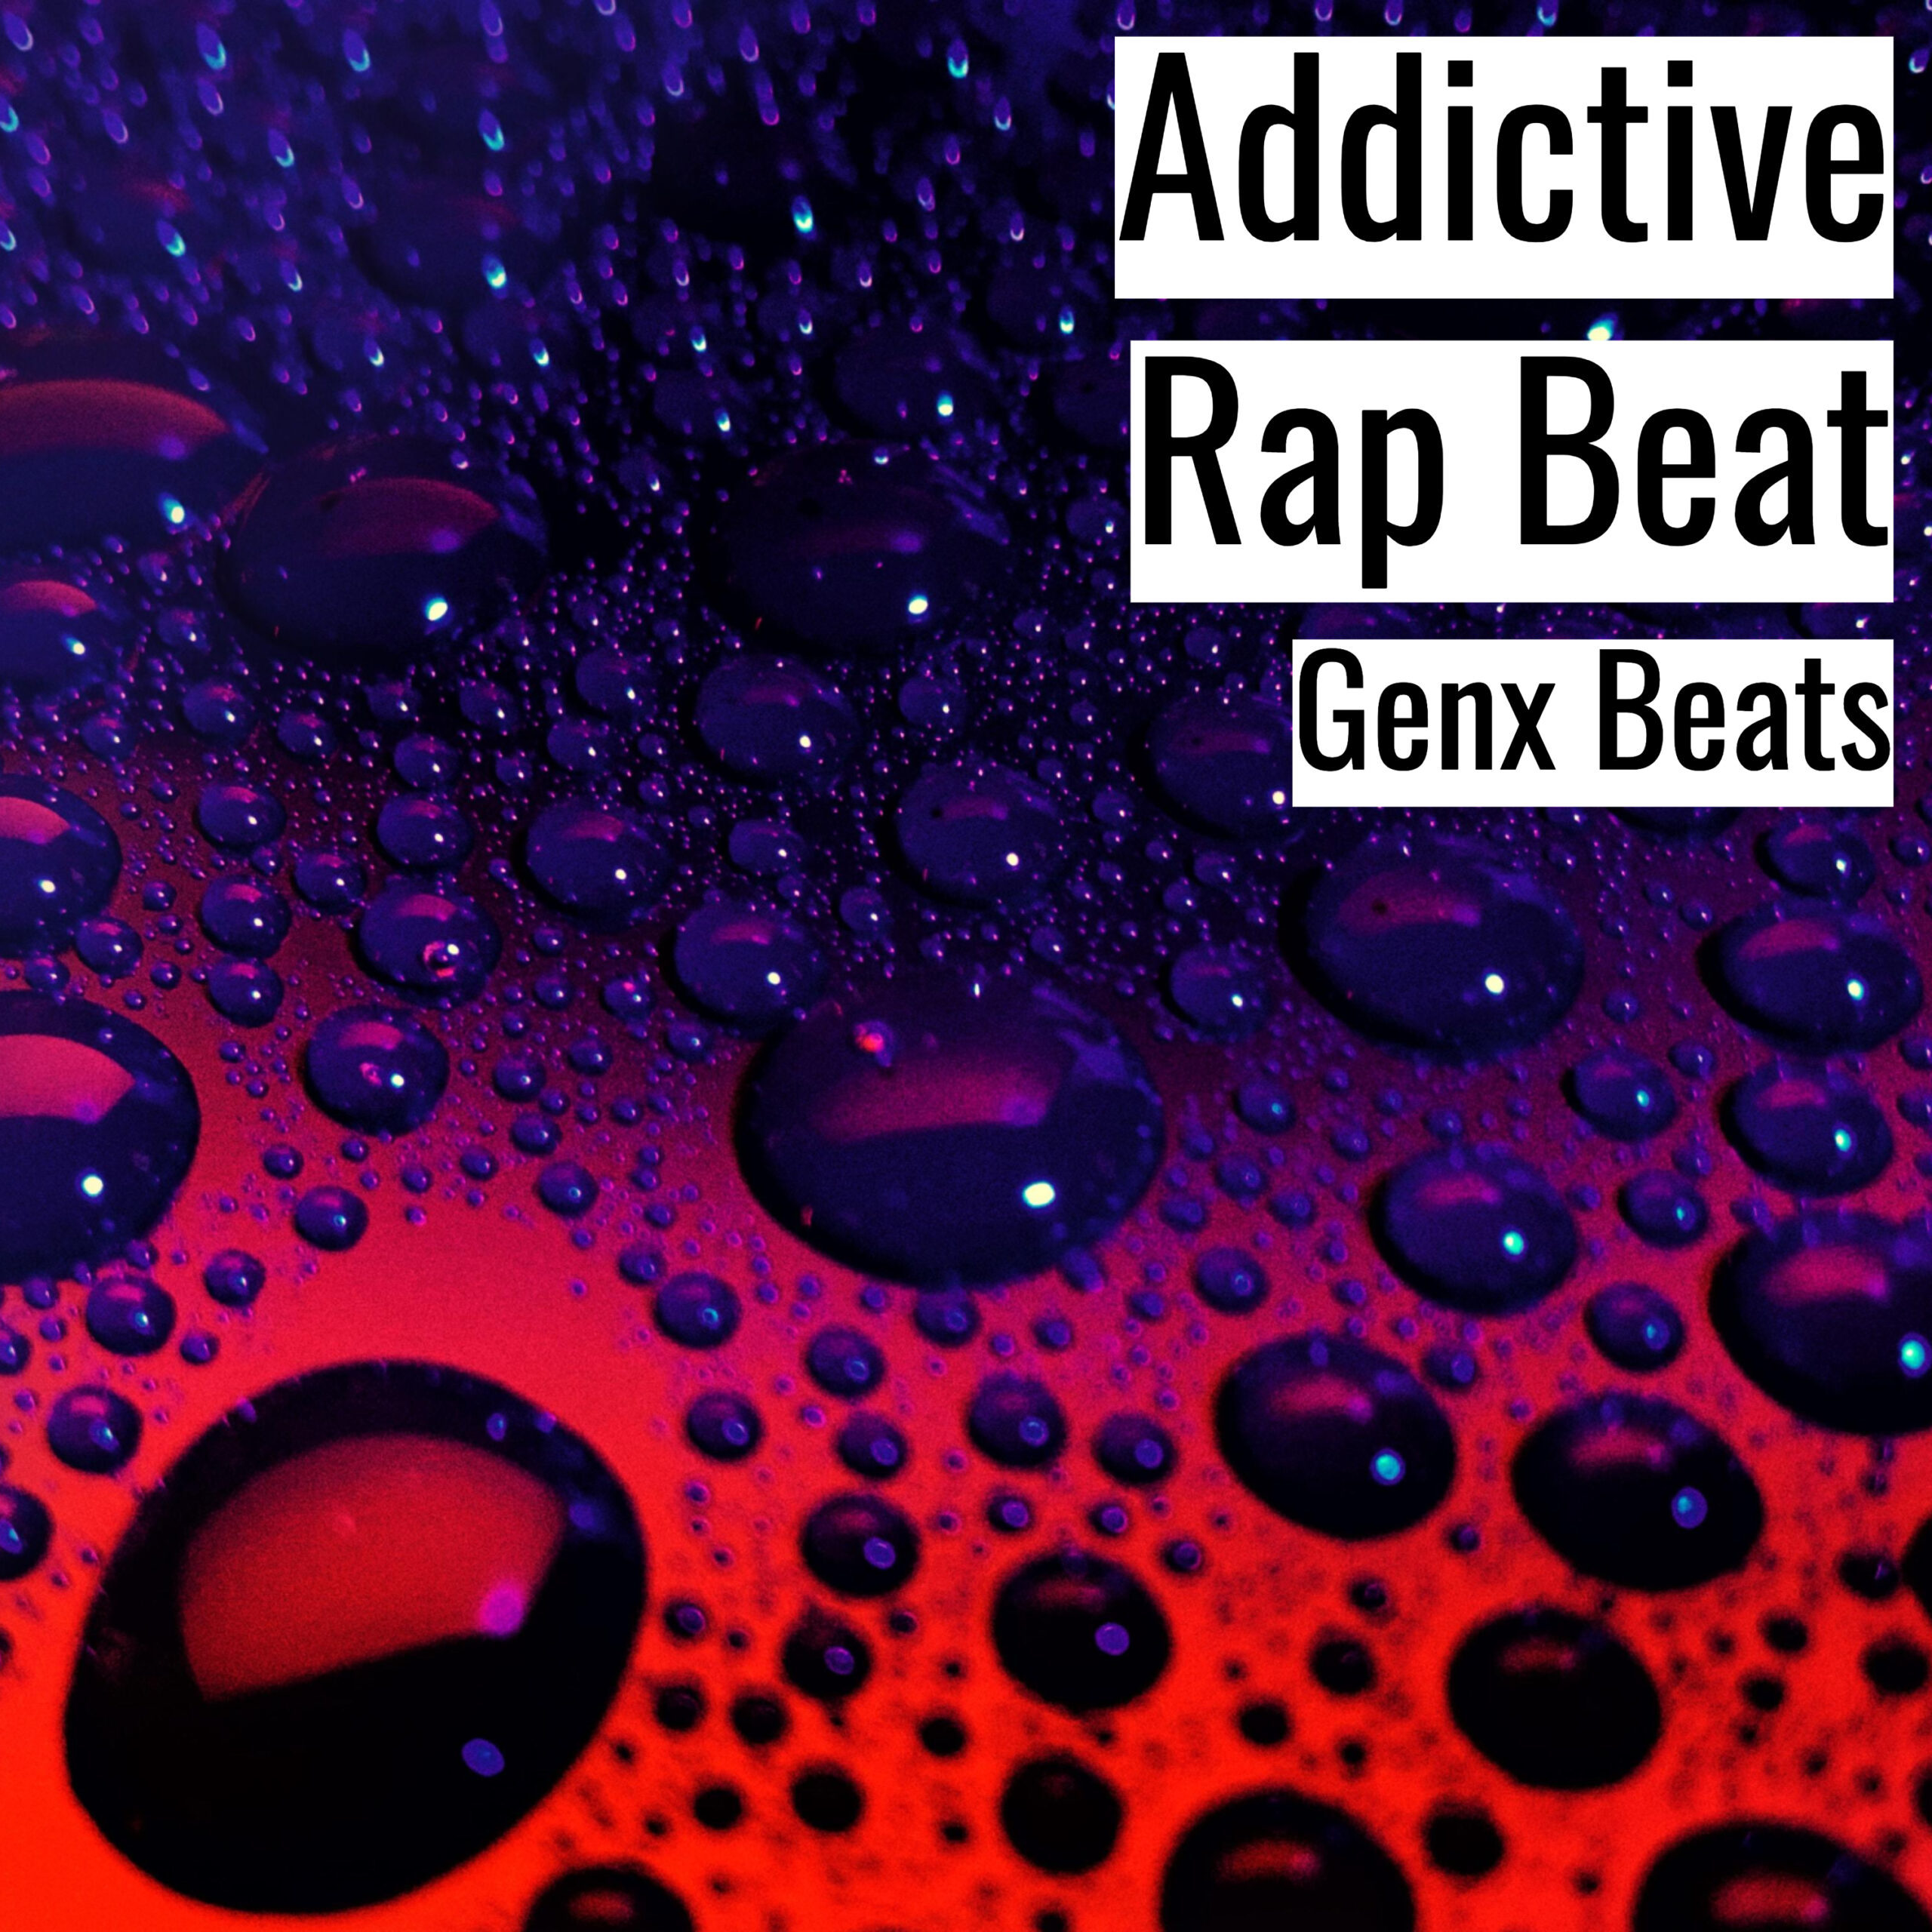 Addictive Rap Beat scaled